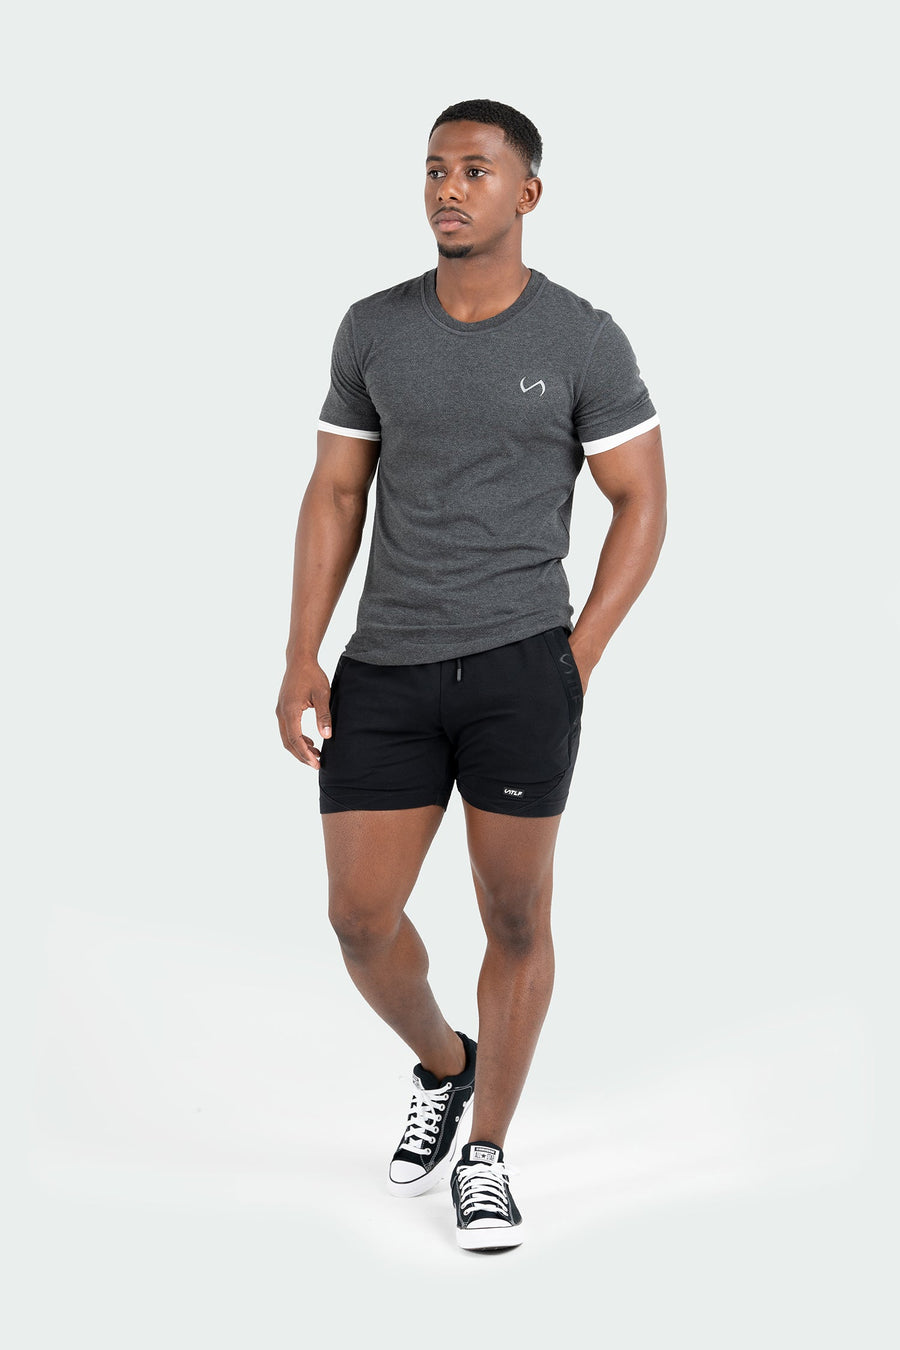 TLF Vital 5” Shorts - Men’s 5 Inch inseam Shorts - Black - 5